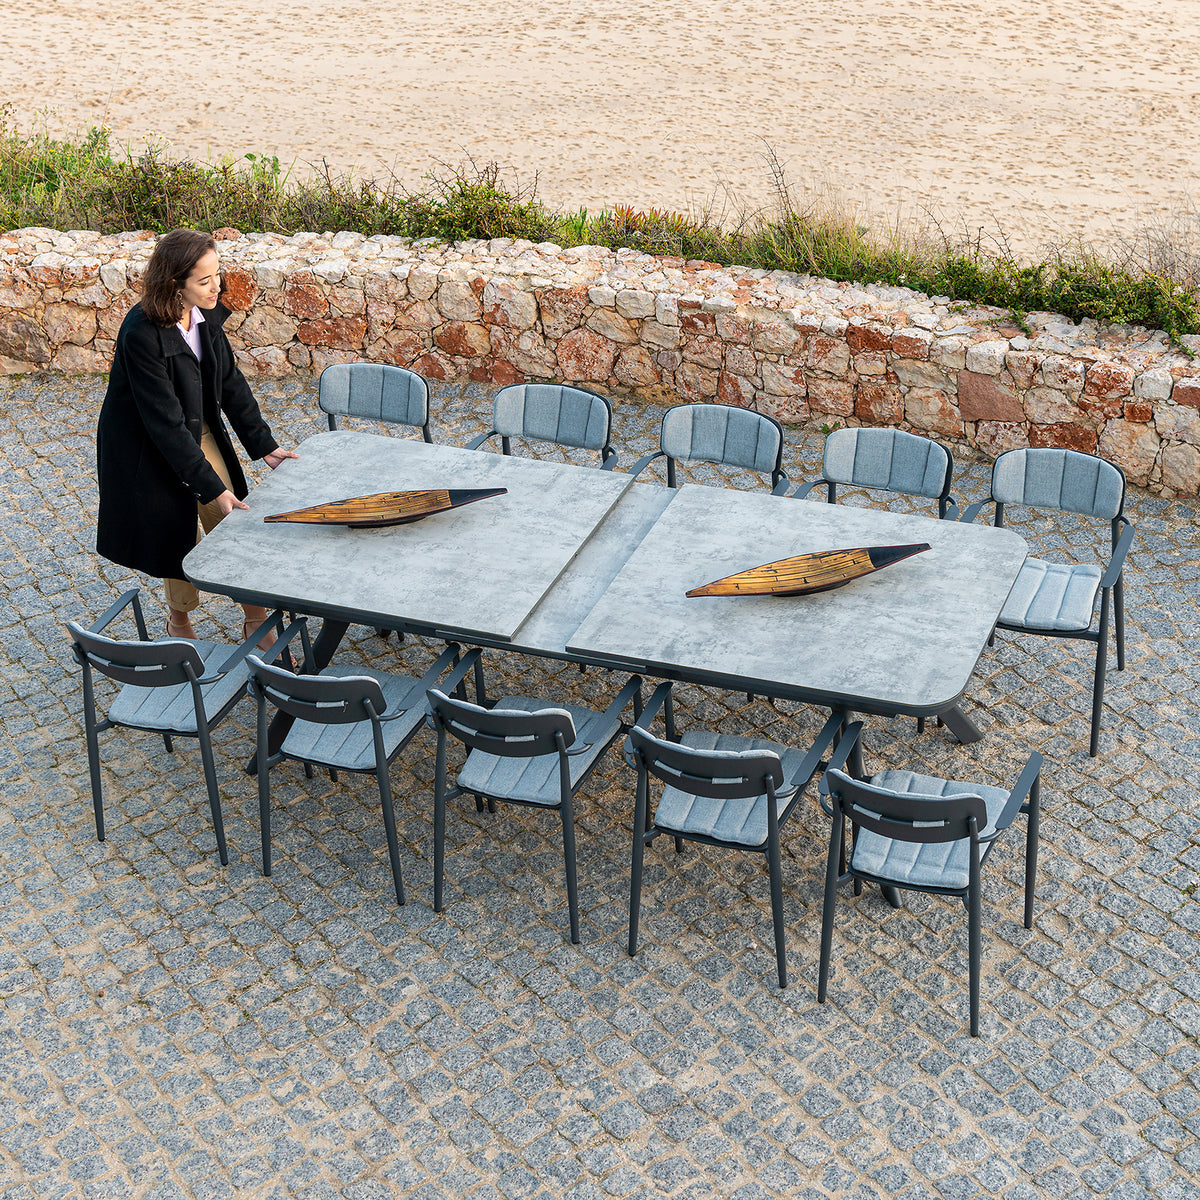 Alexander Rose Rimini 10 Seater Outdoor Aluminium Extending Table Dining Set